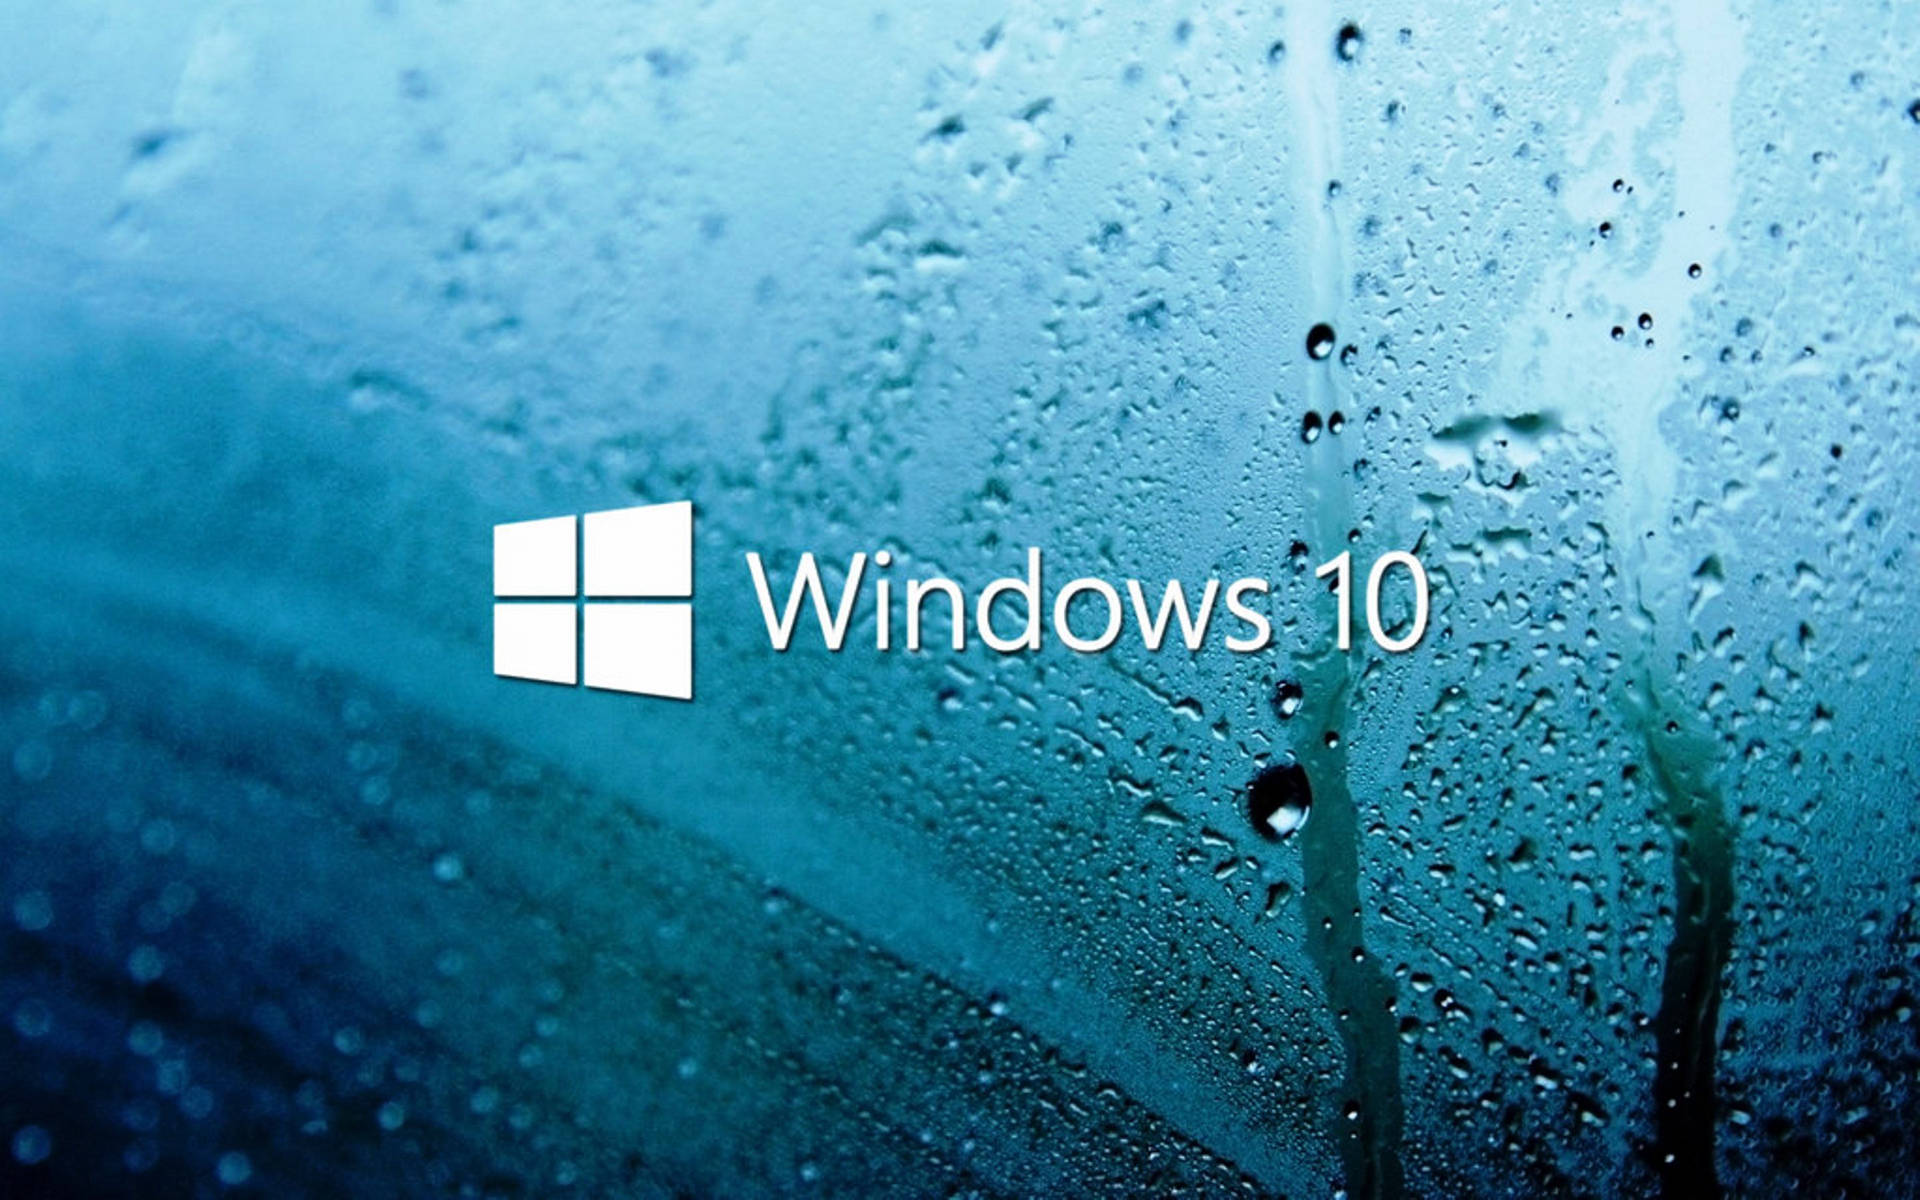 Windows 10 Hd Moist Glass Background